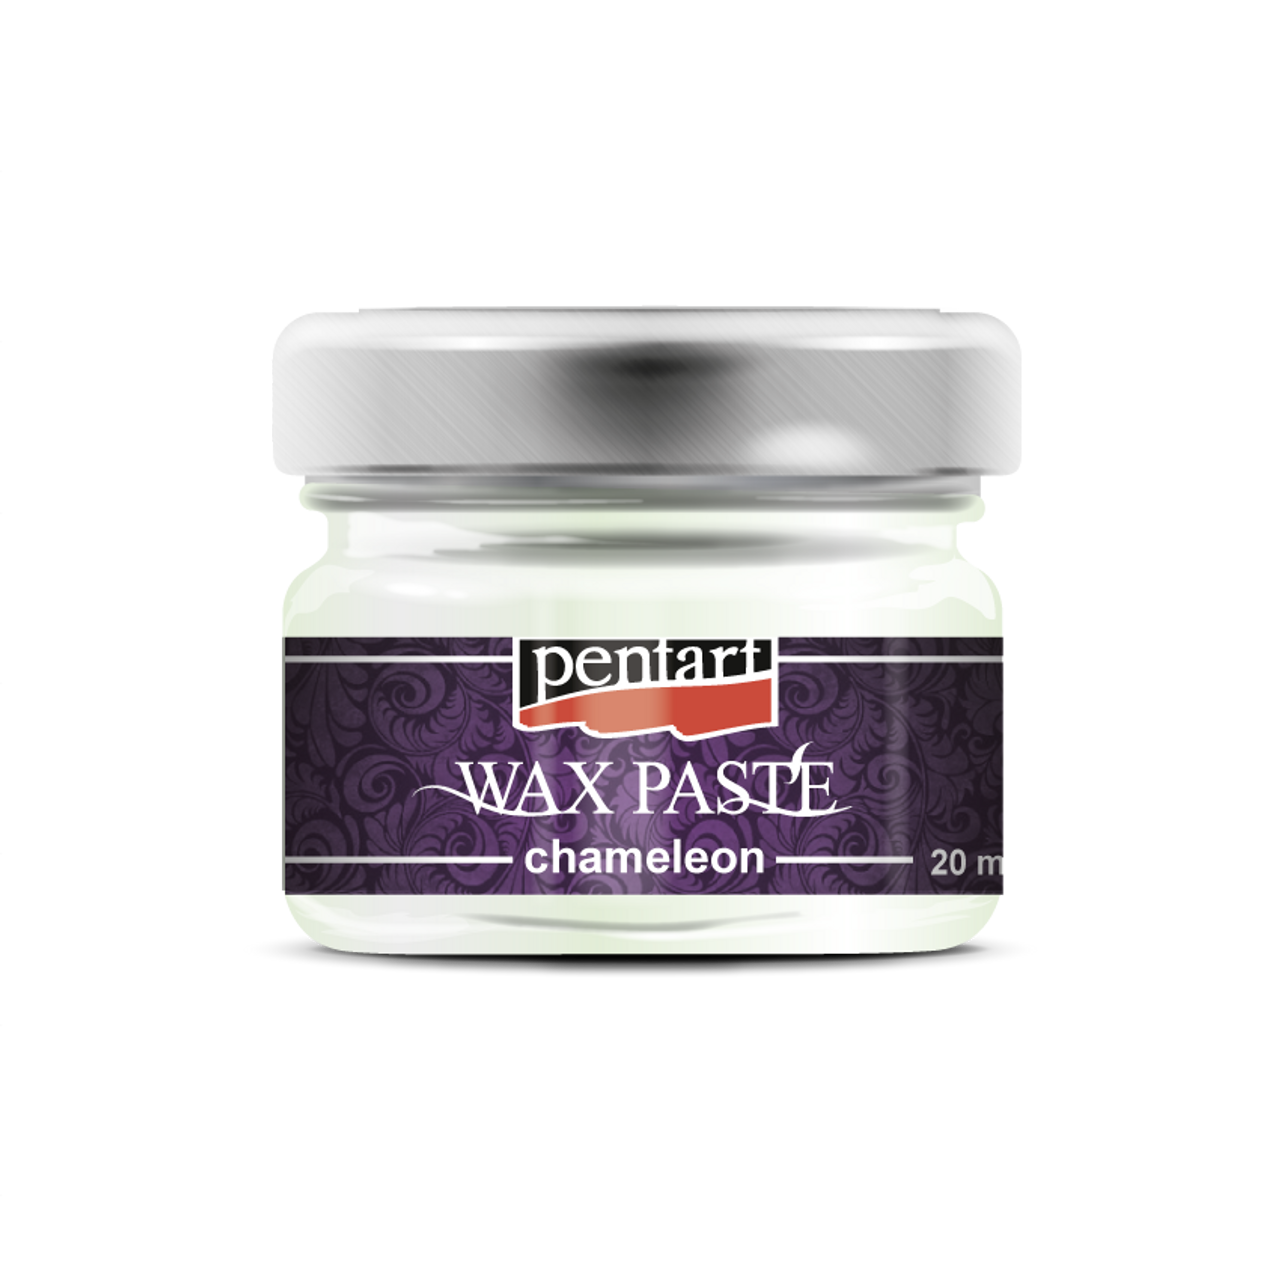 Pentart Wax Paste Metallic  and chameleon 20 ml